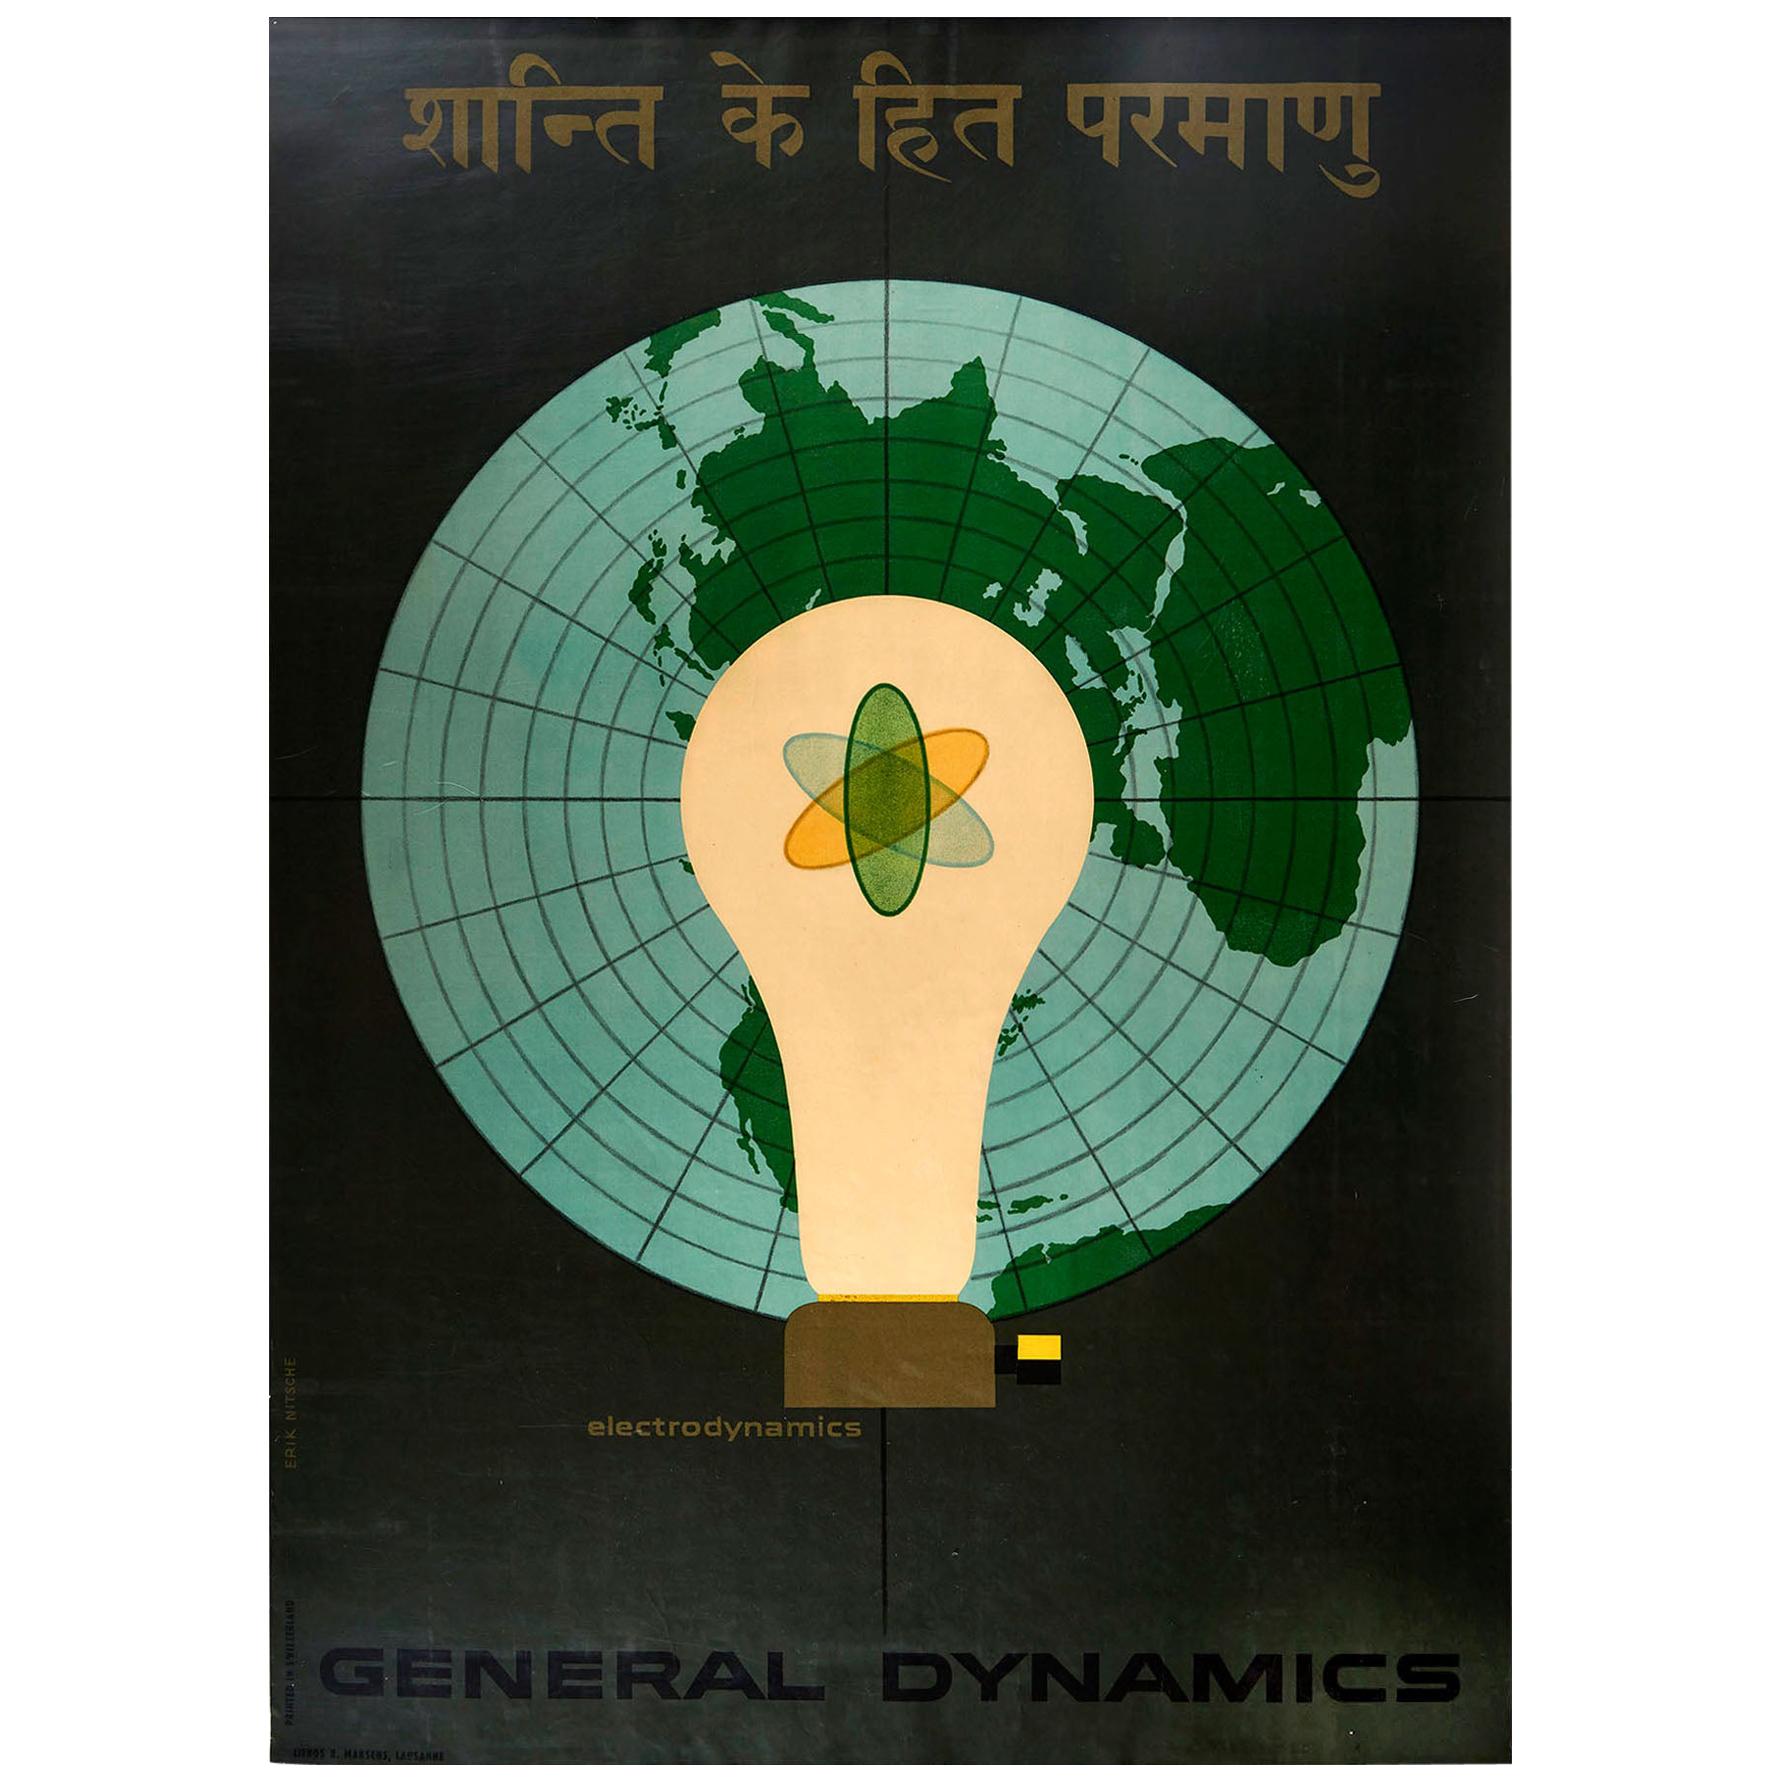 Original Vintage Poster General Dynamics Electrodynamics Atomic Energy Map Light For Sale